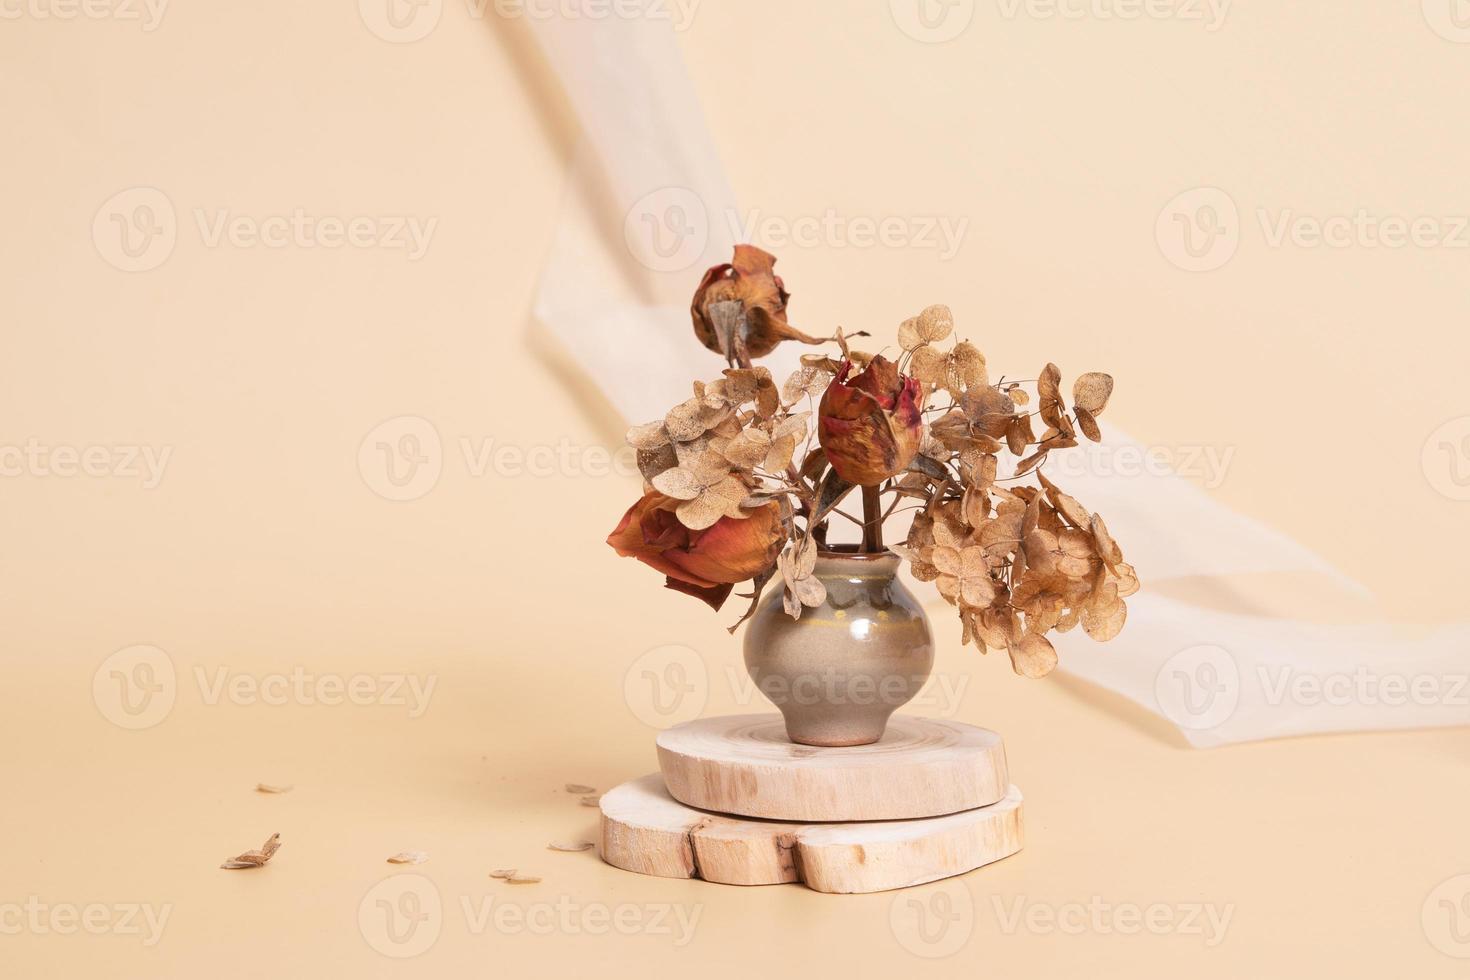 miniatuurvaasje met droogbloemen op houten podia. stilleven monochroom minimalistisch neutraal kleurconcept. foto